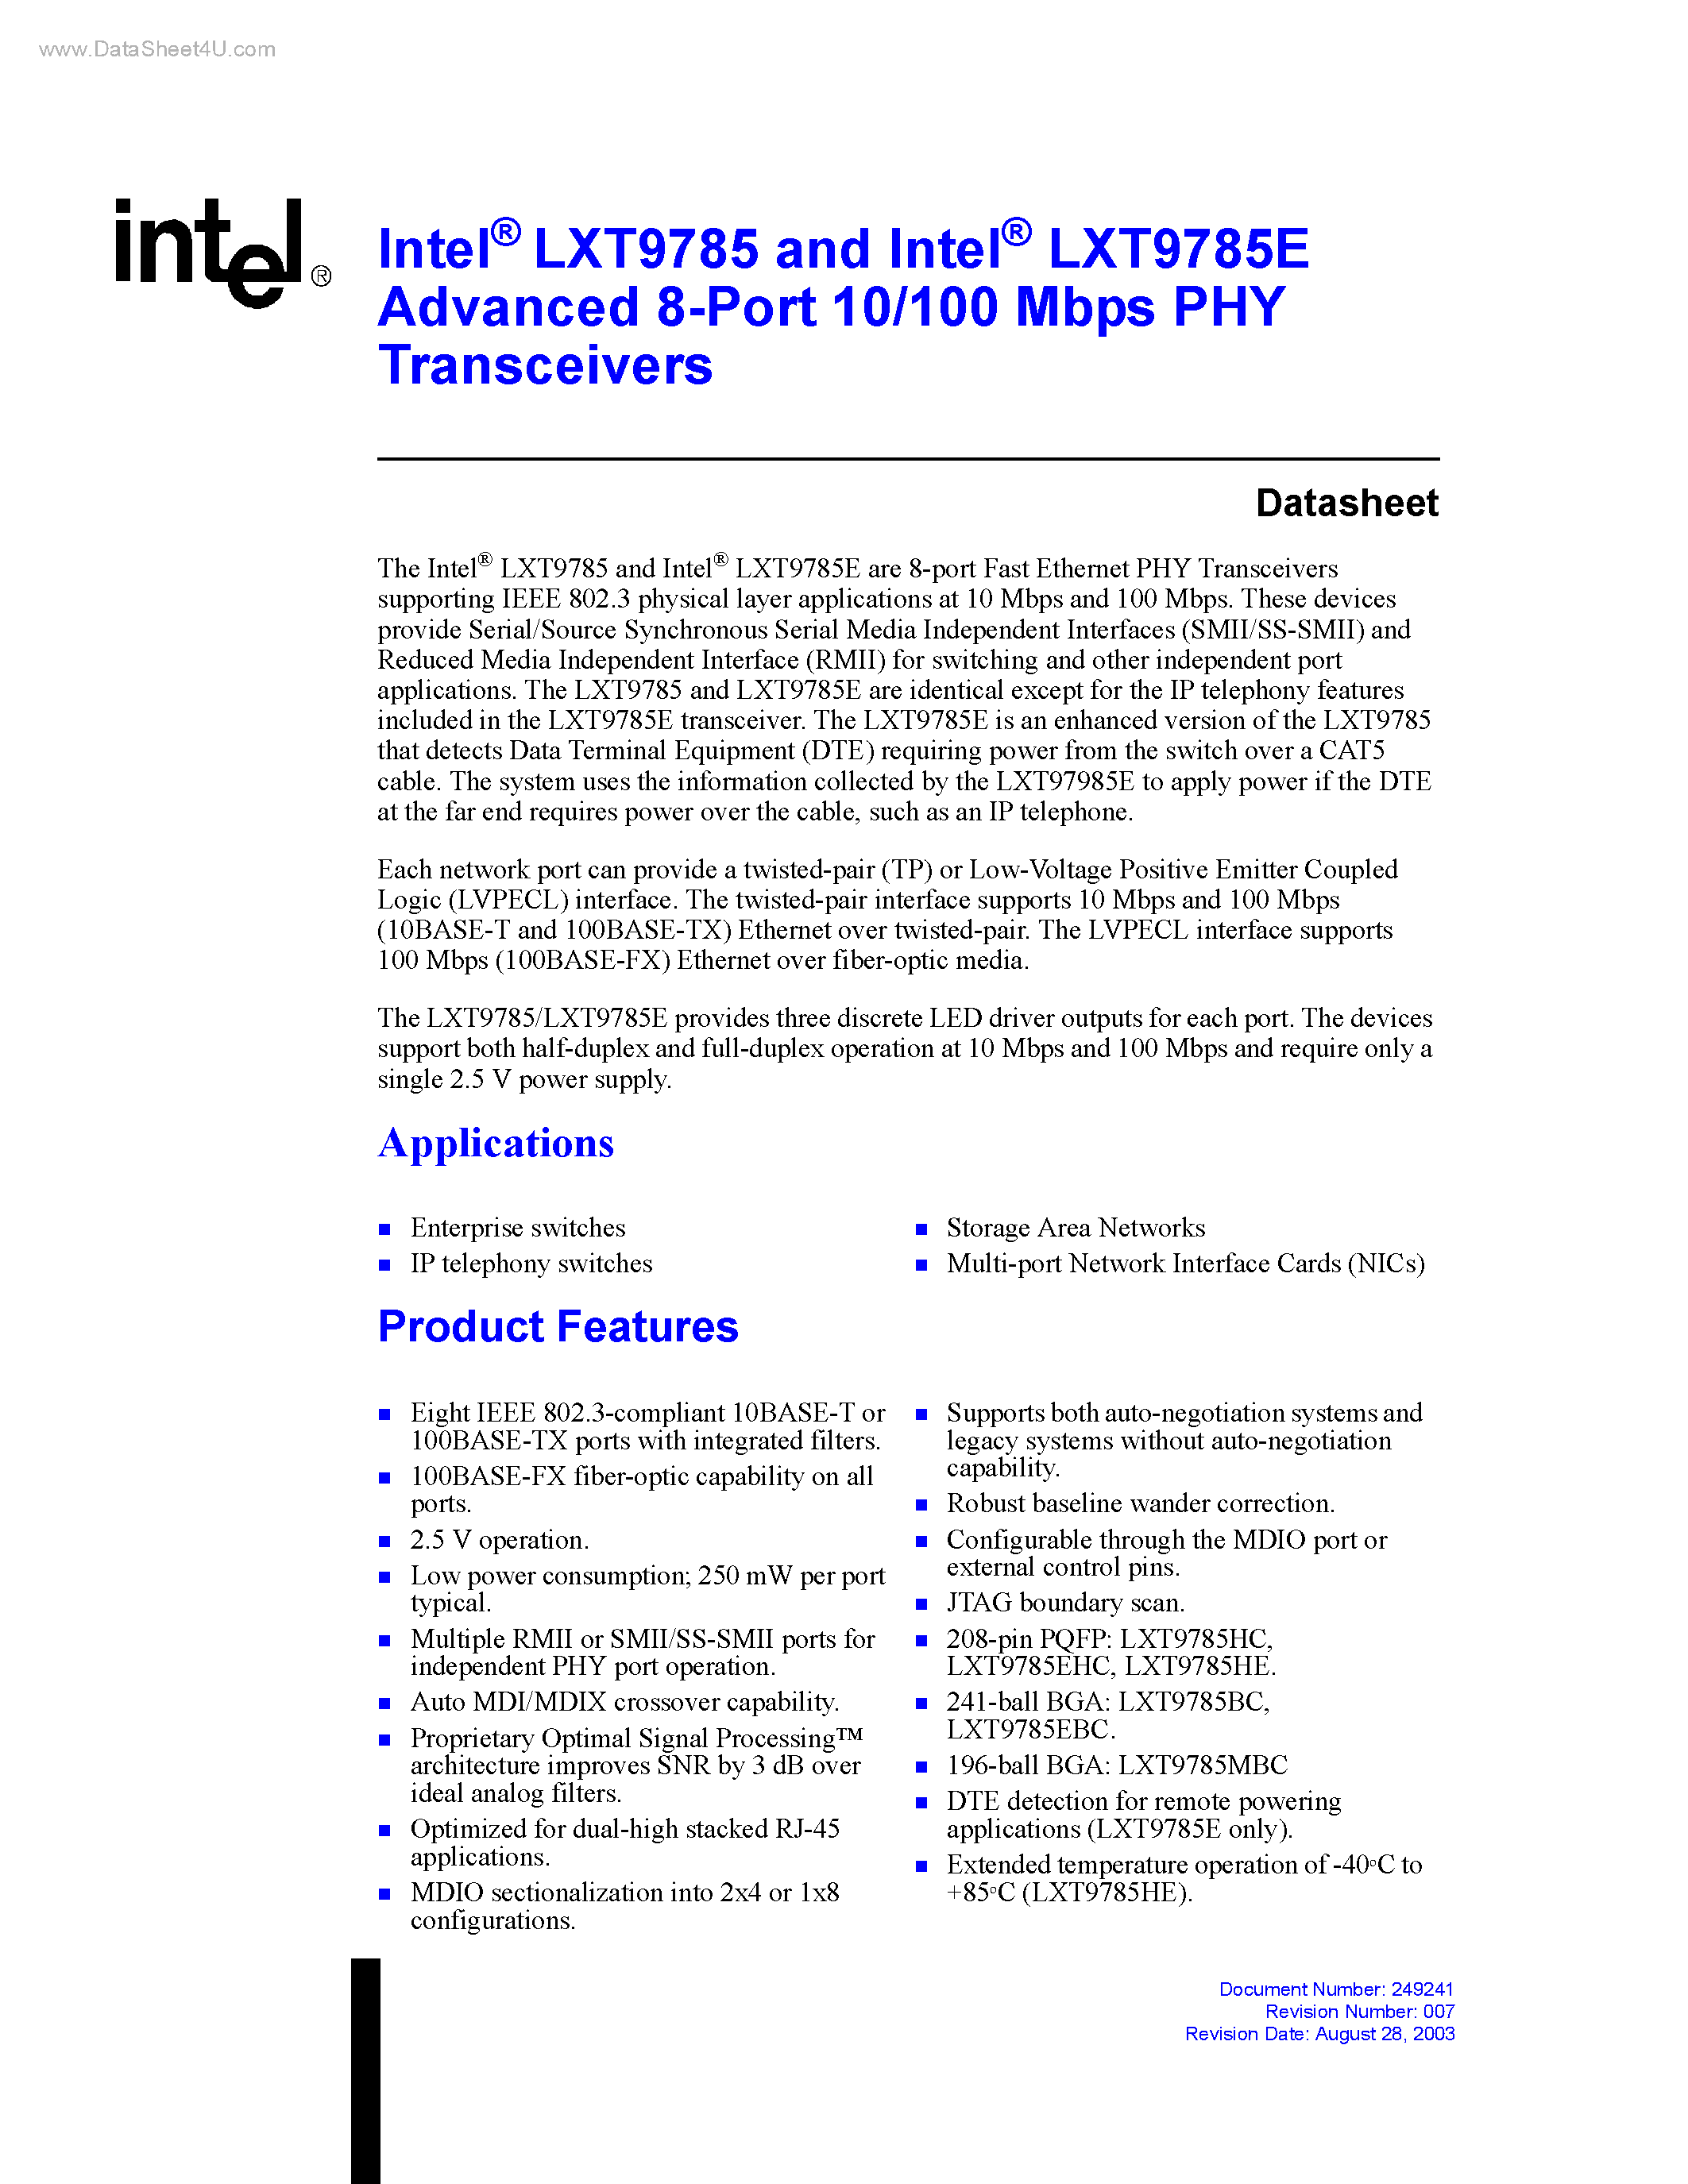 Даташит LXT9785 - Advanced 8-Port 10/100 Mbps PHY Transceivers страница 1